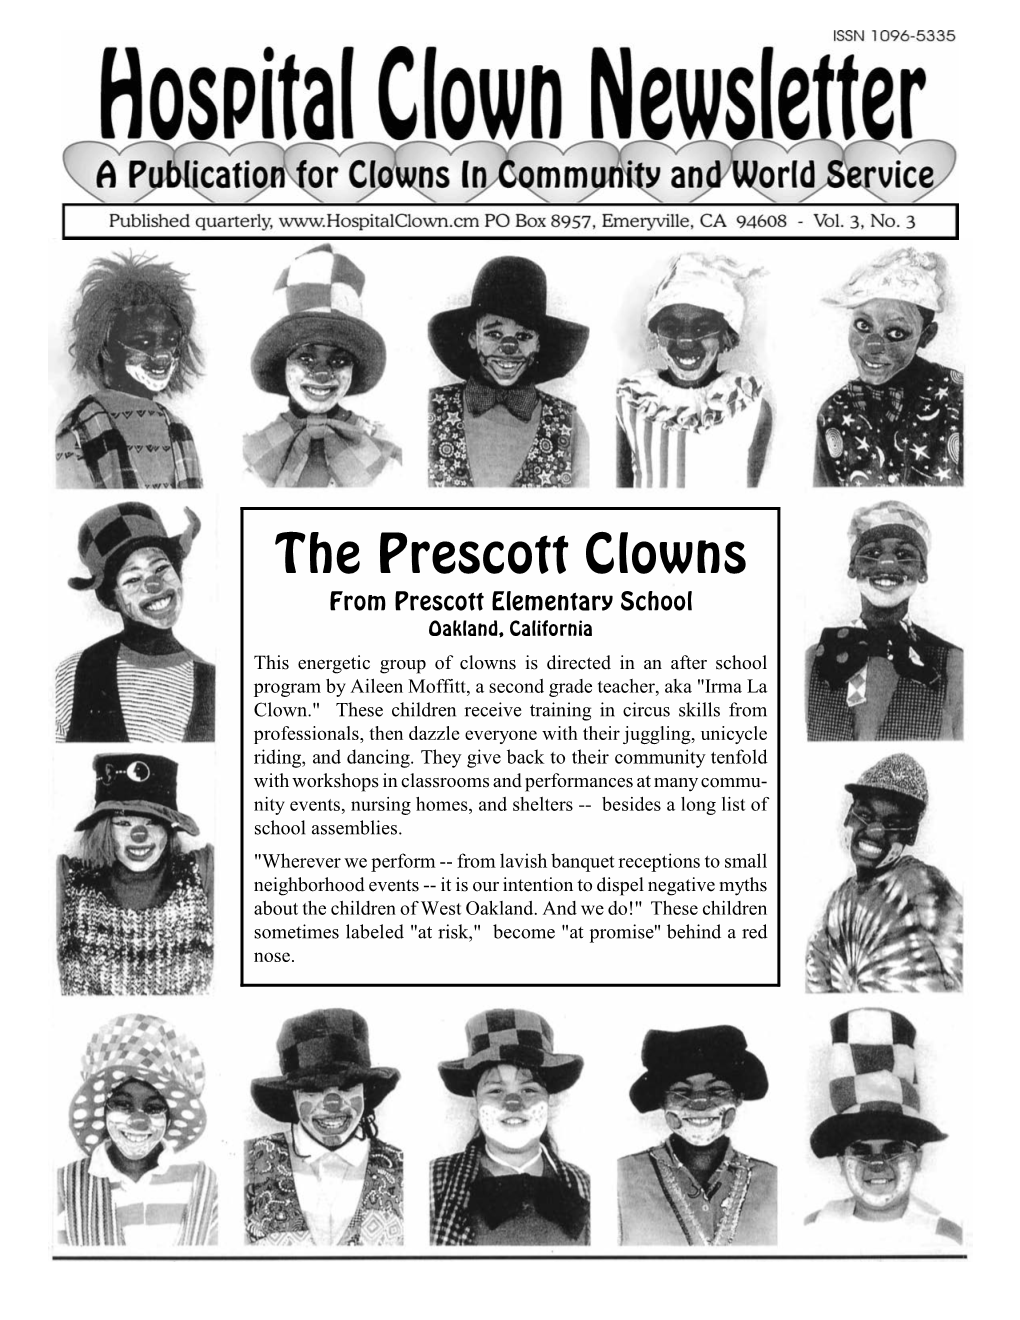 The Prescott Clowns